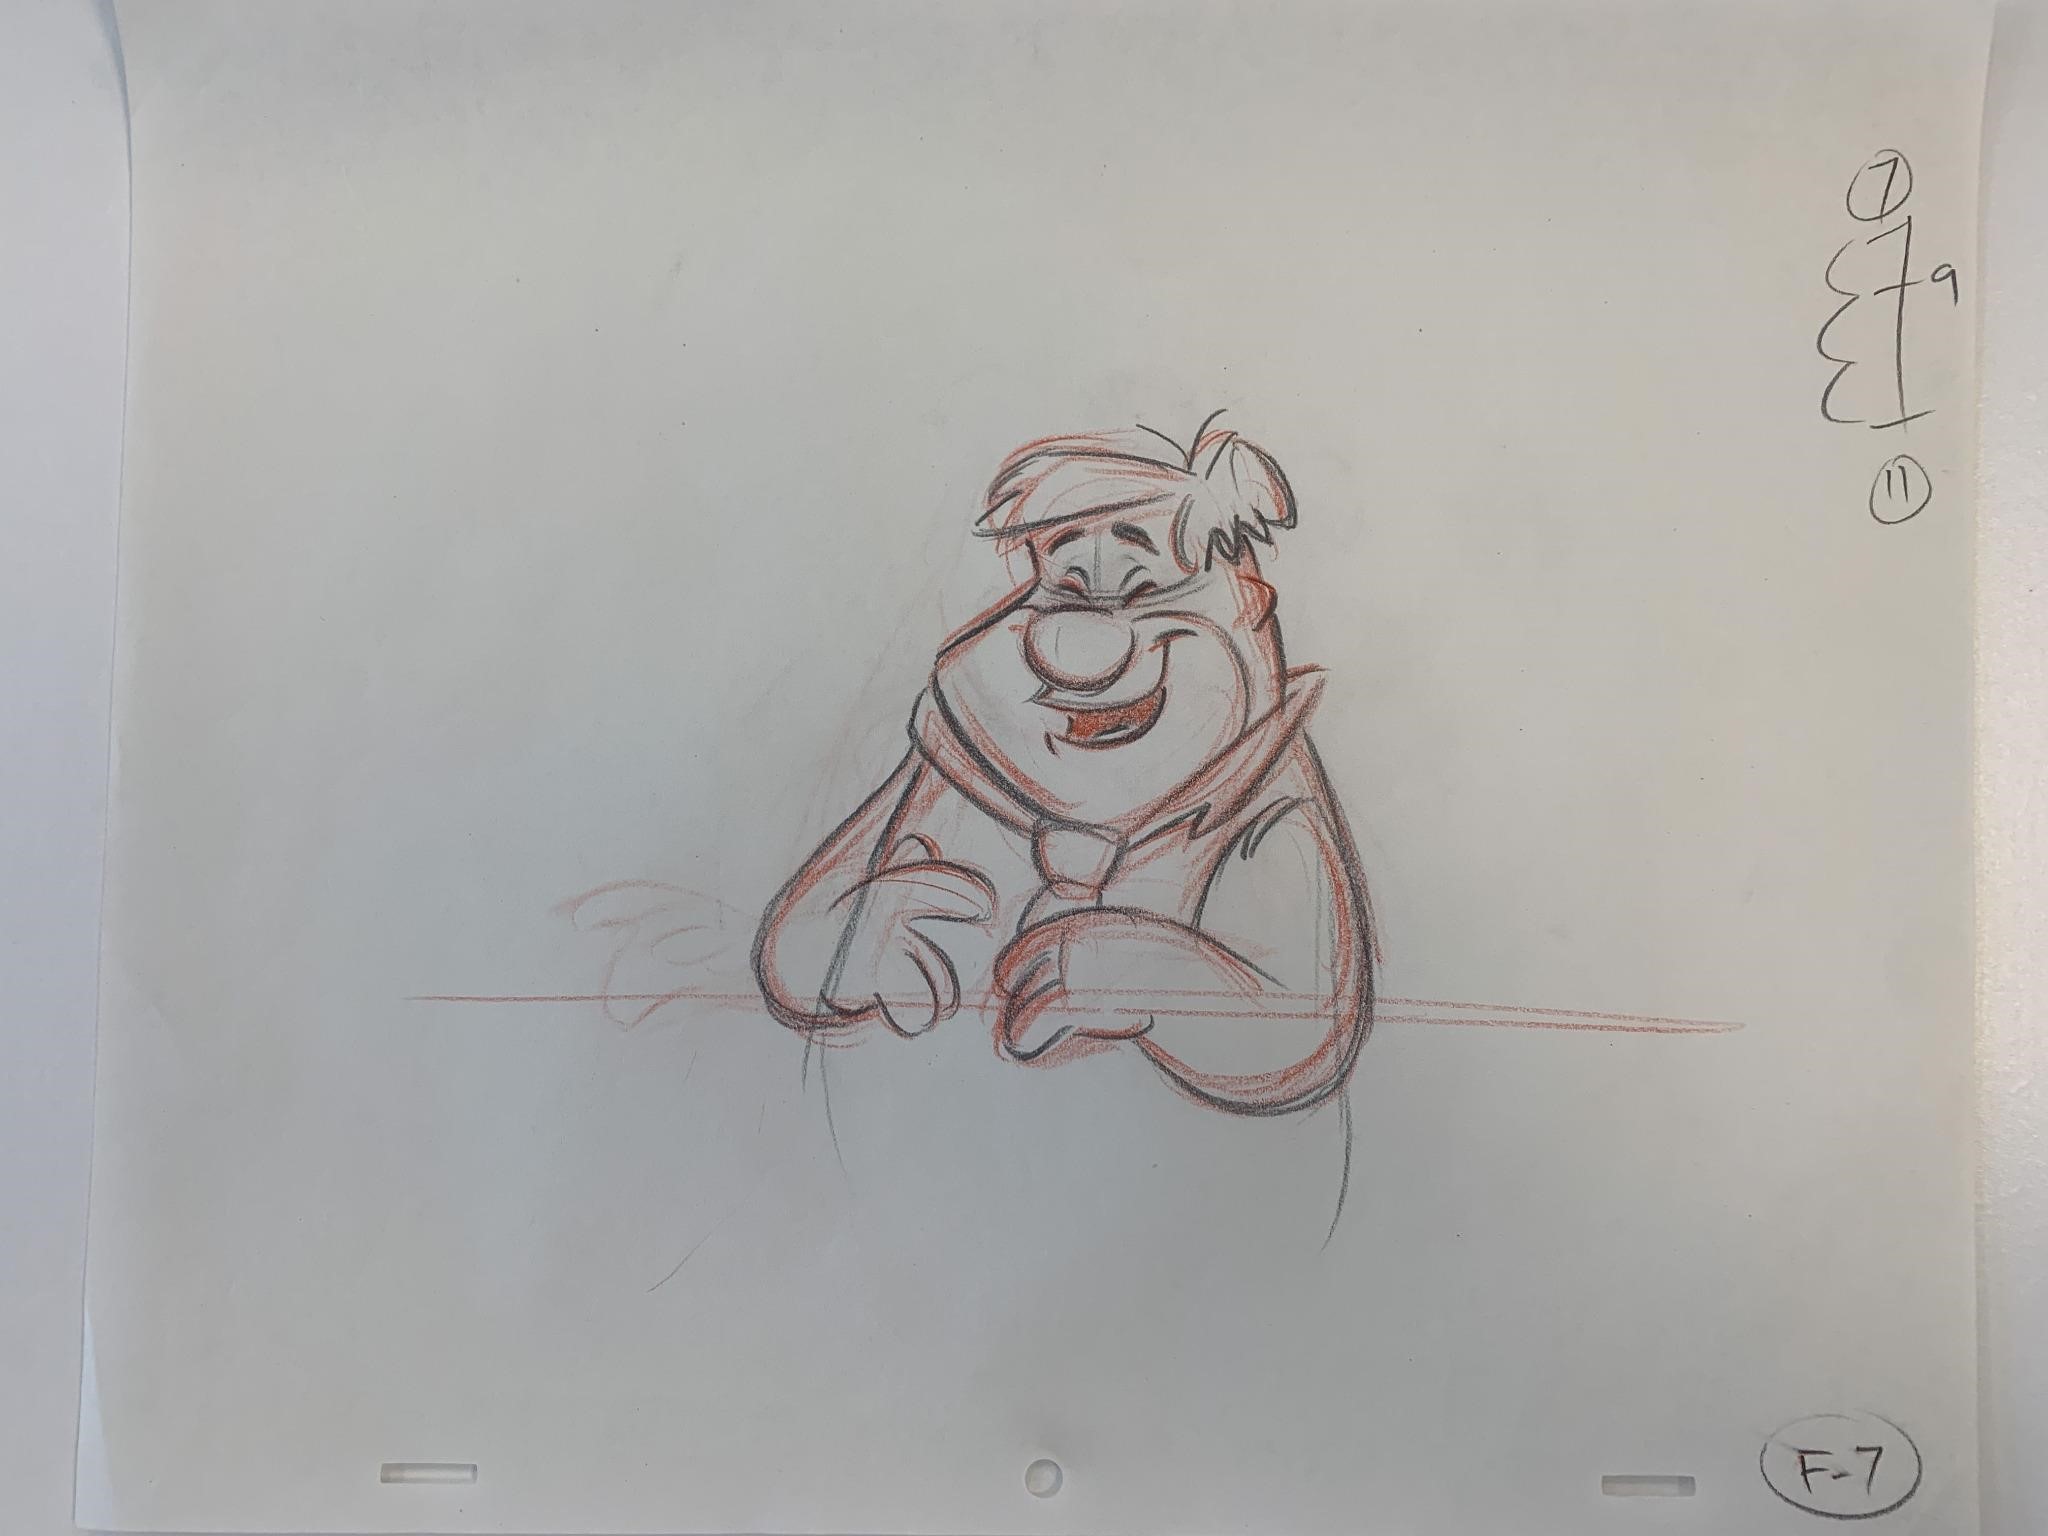 The Flintstones original hand drawn artwork for ca